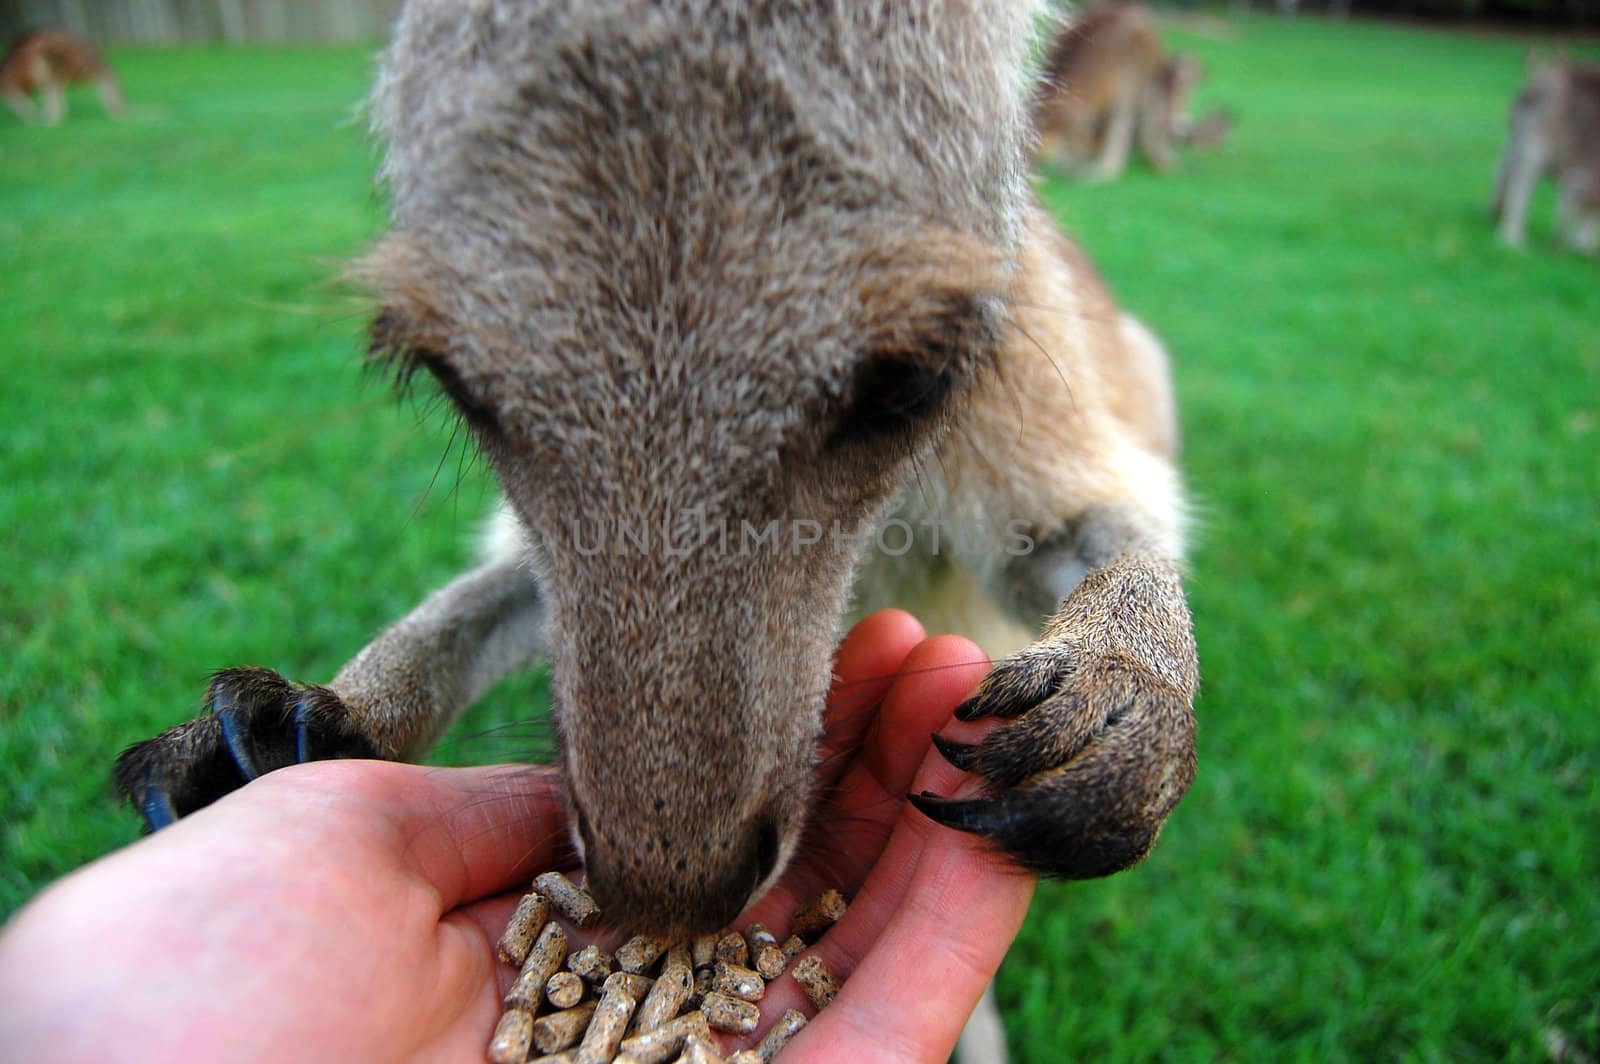 Feeding kangaroo by danemo